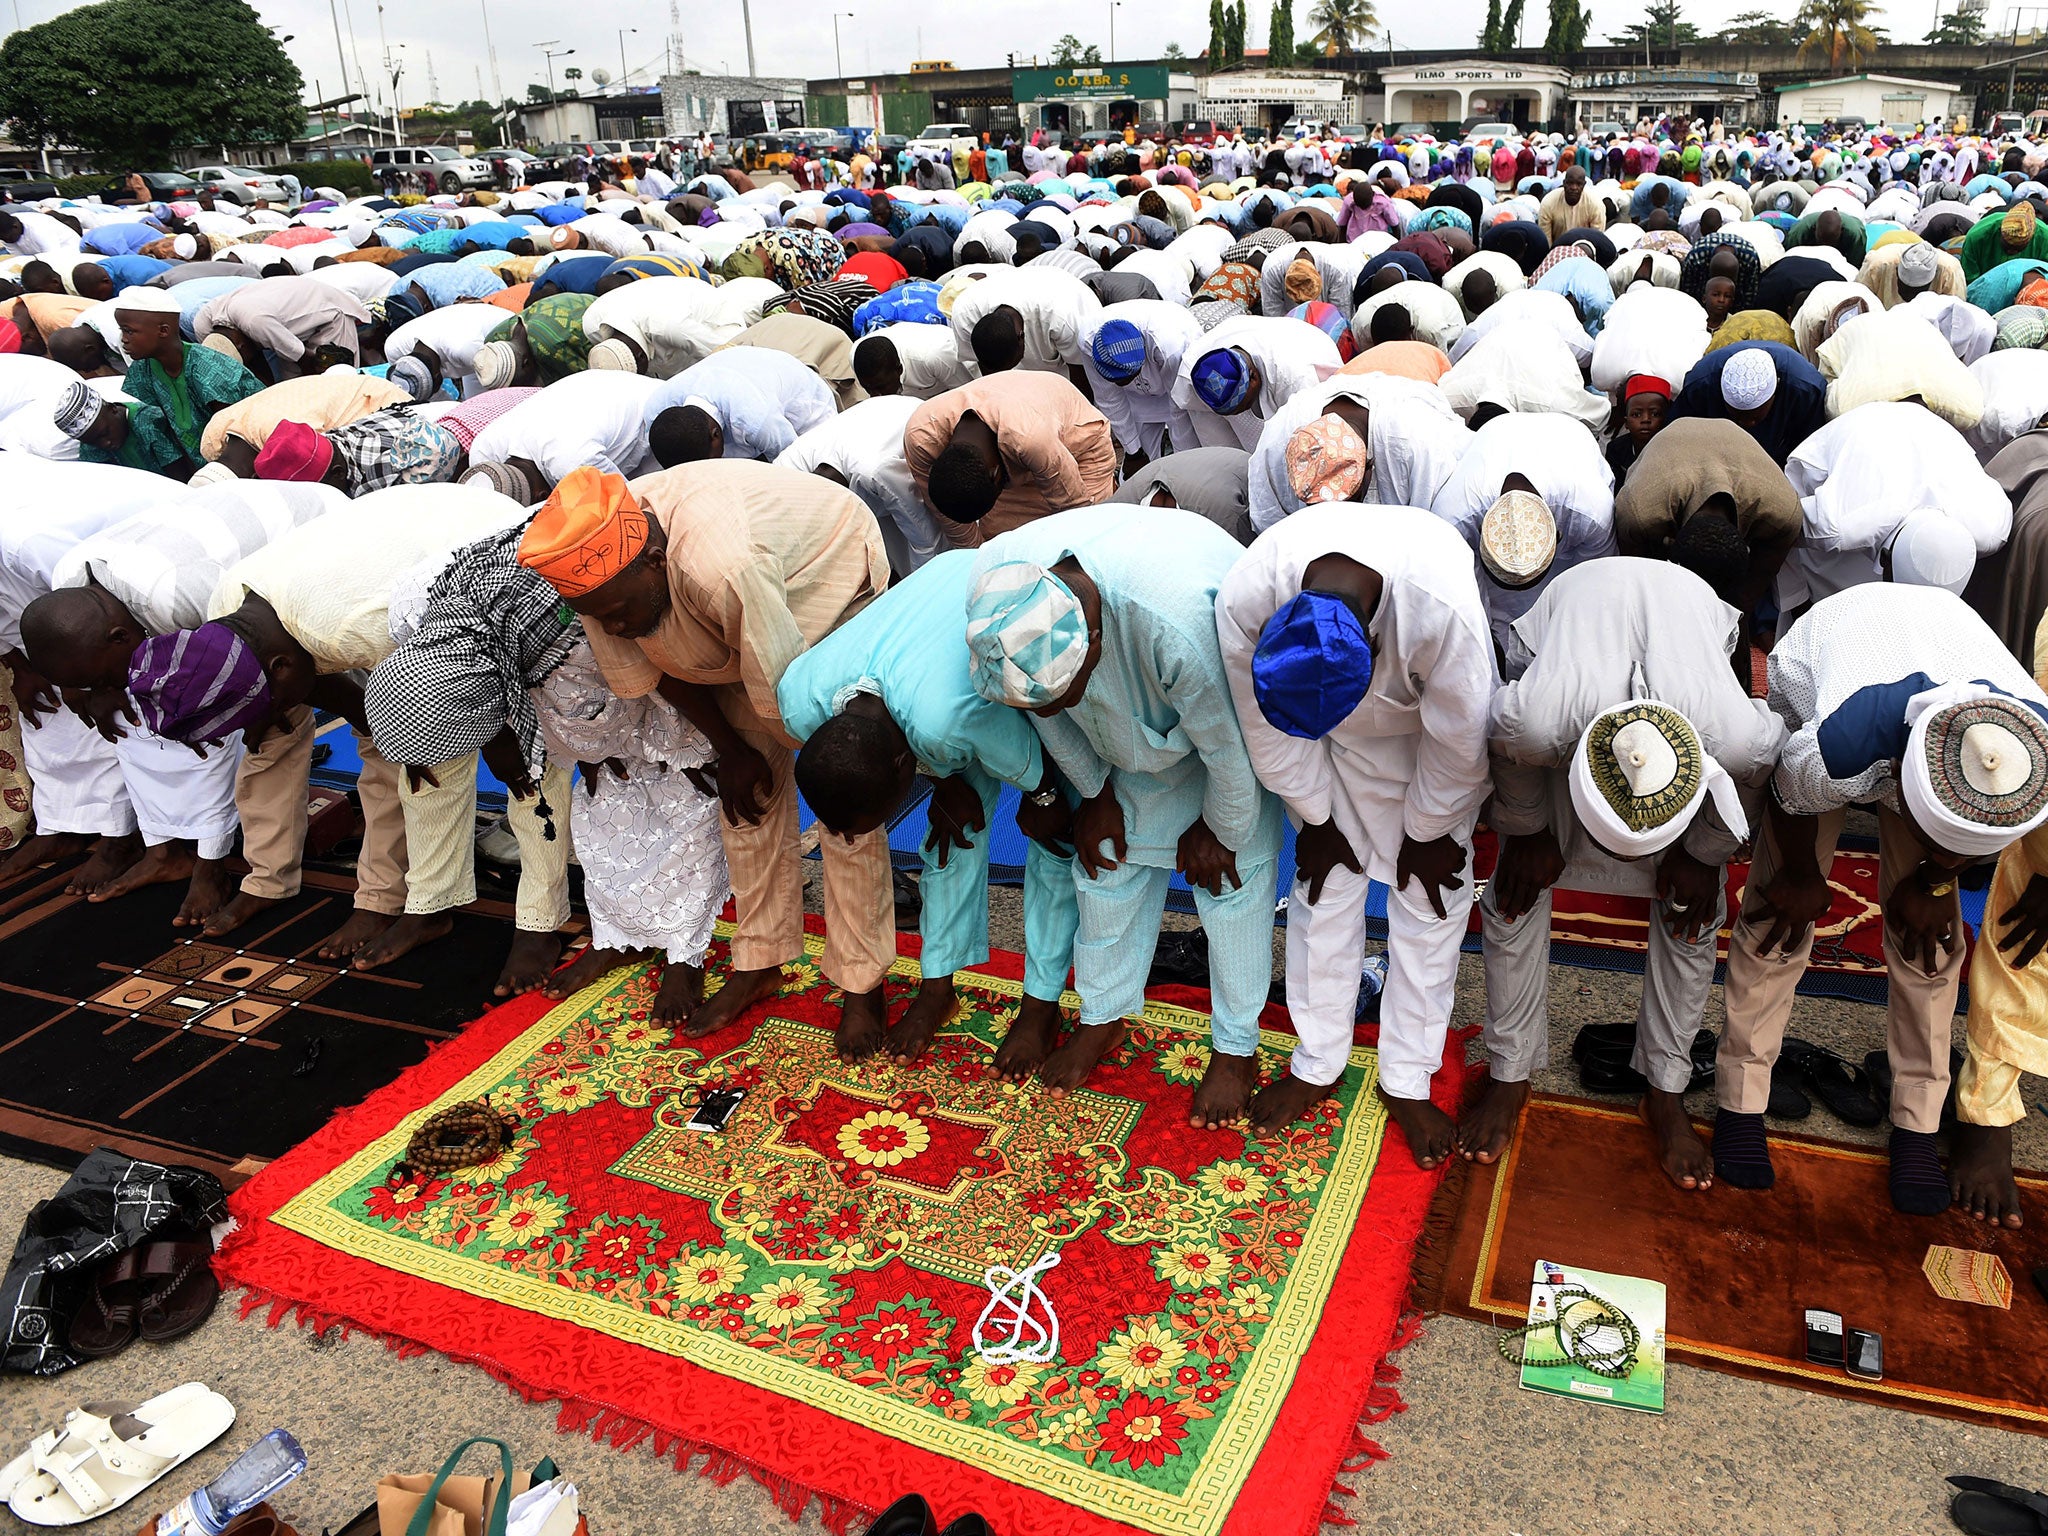 Men pray outdoors in Lagos, Nigeria on 12 September